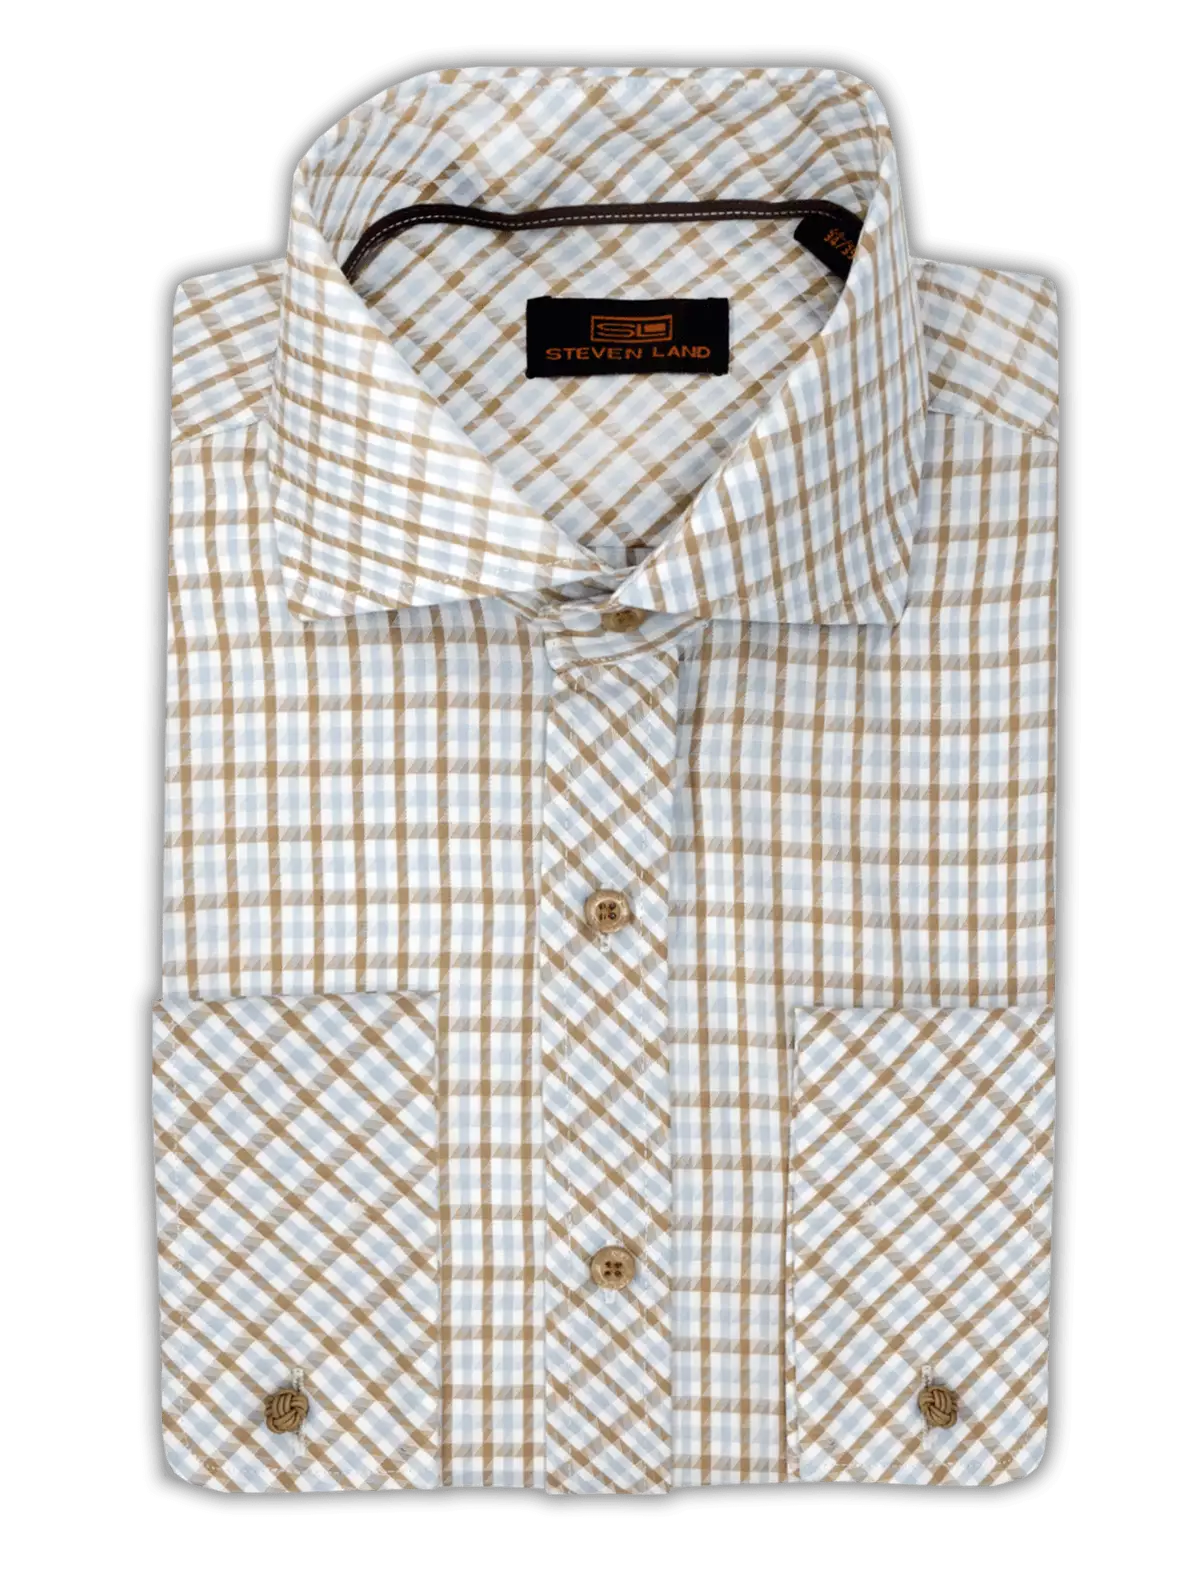 Steven Land SHIRTS Steven Land Mens Brown Plaid Spread Collar French Cuff 100% Cotton Dress Shirt